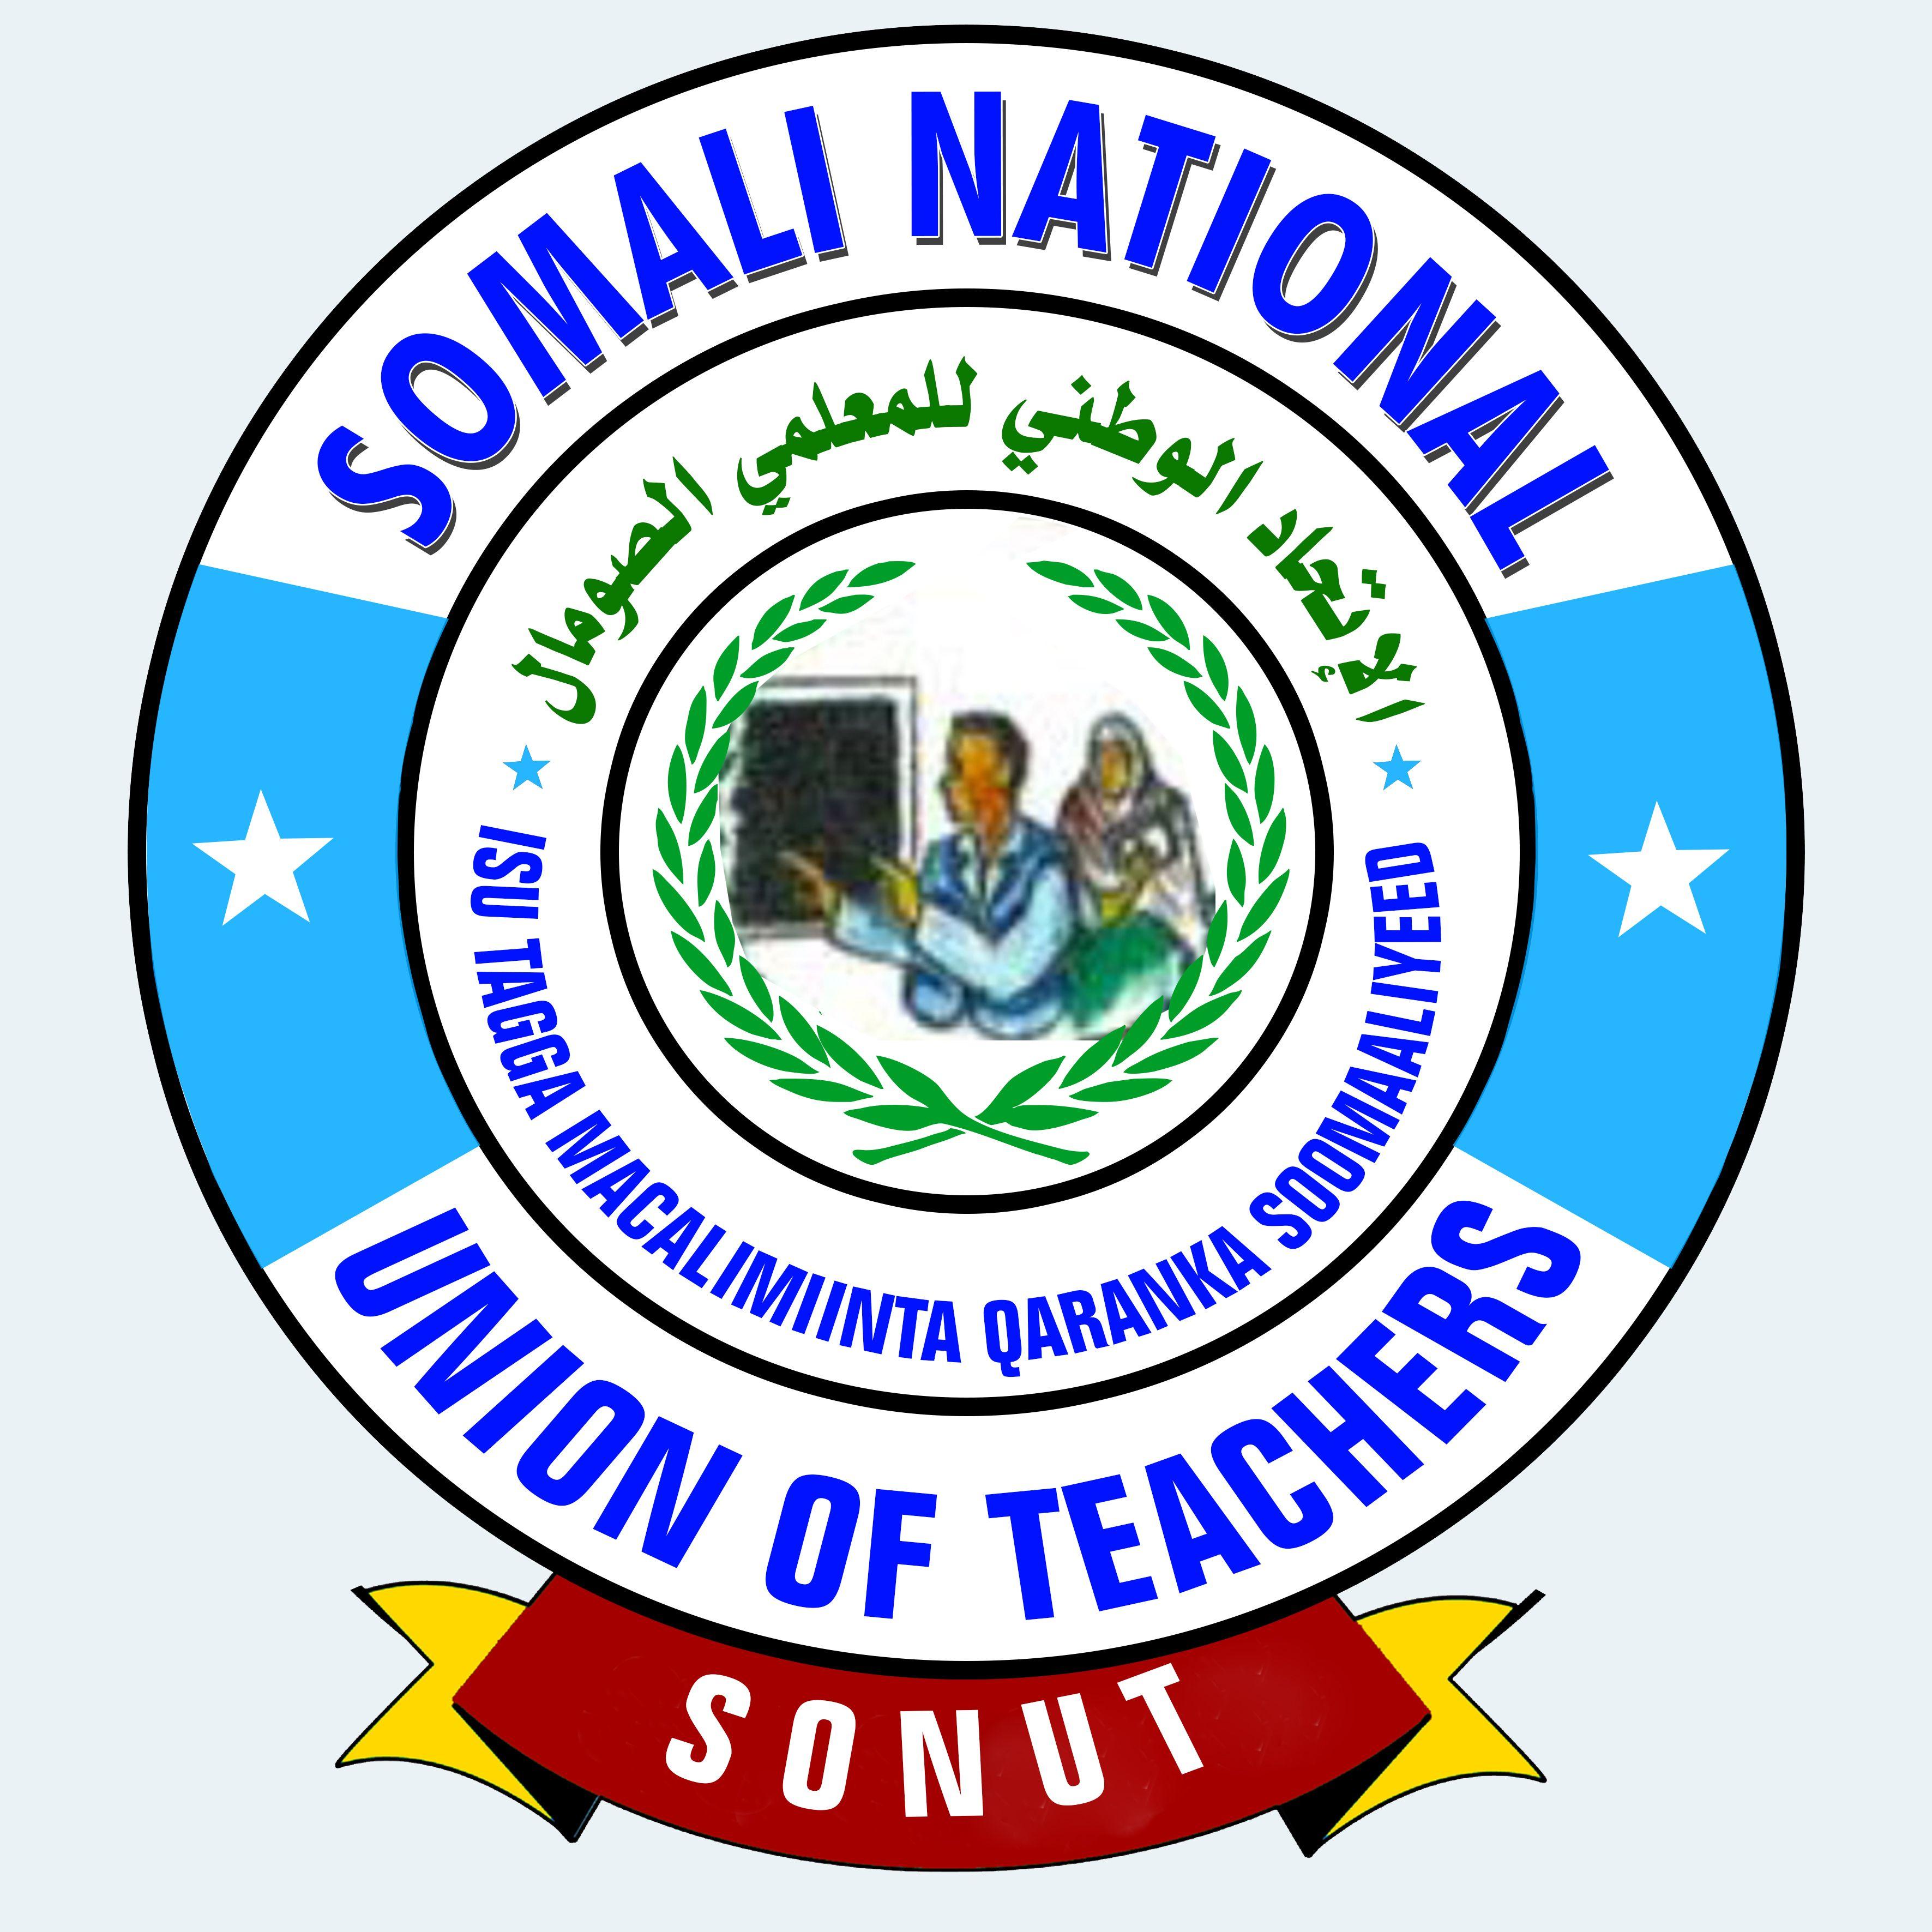 Somali Logo - Somali National Union of Teachers Not Brides